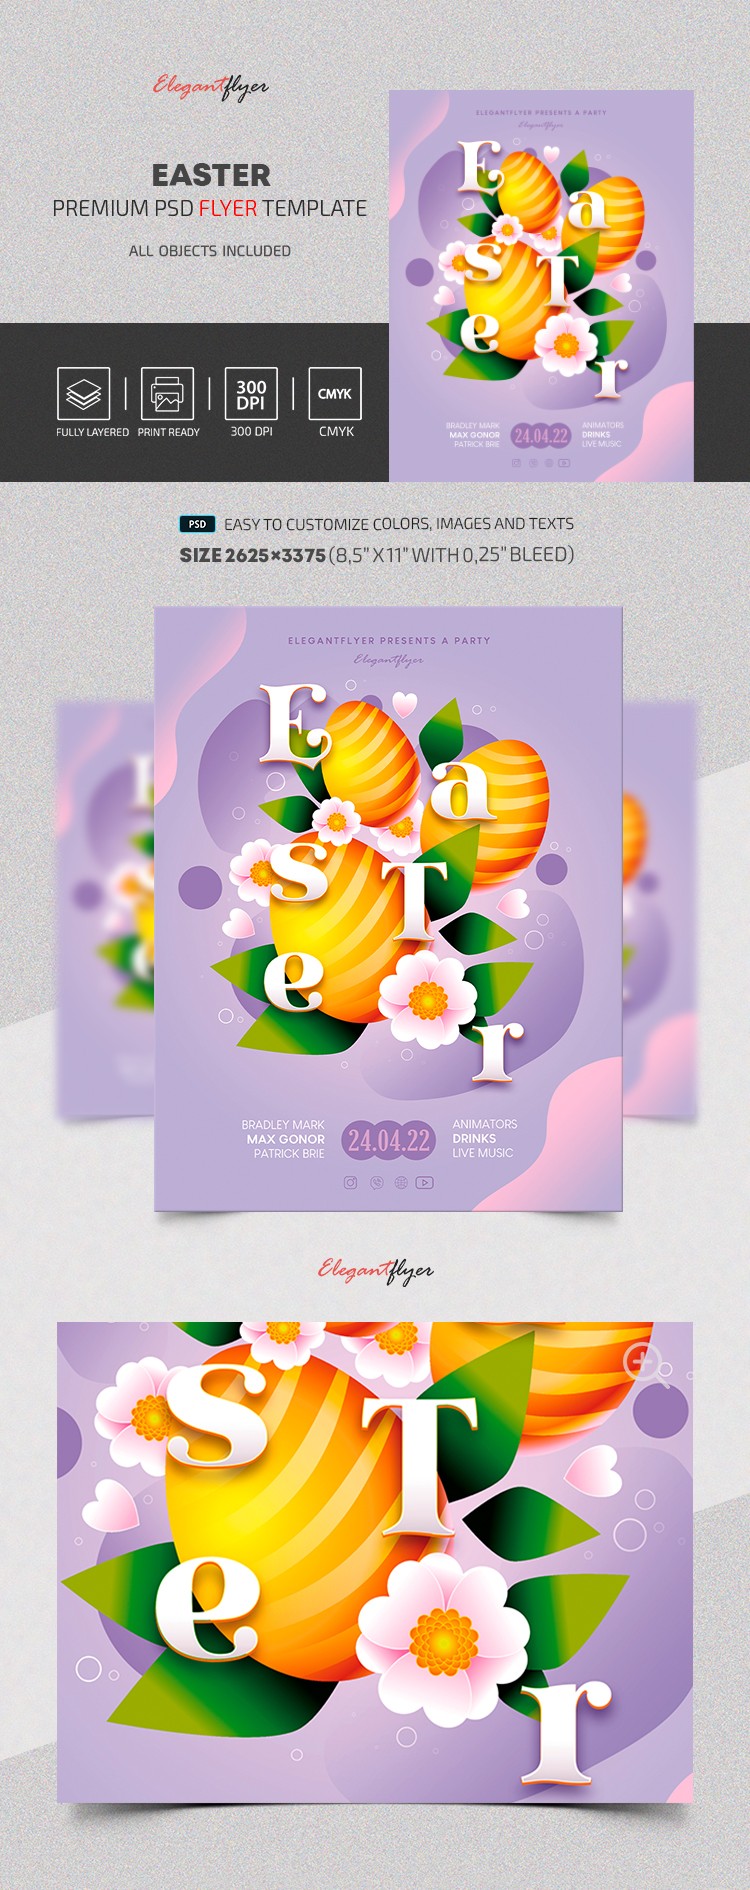 Easter Flyer by ElegantFlyer